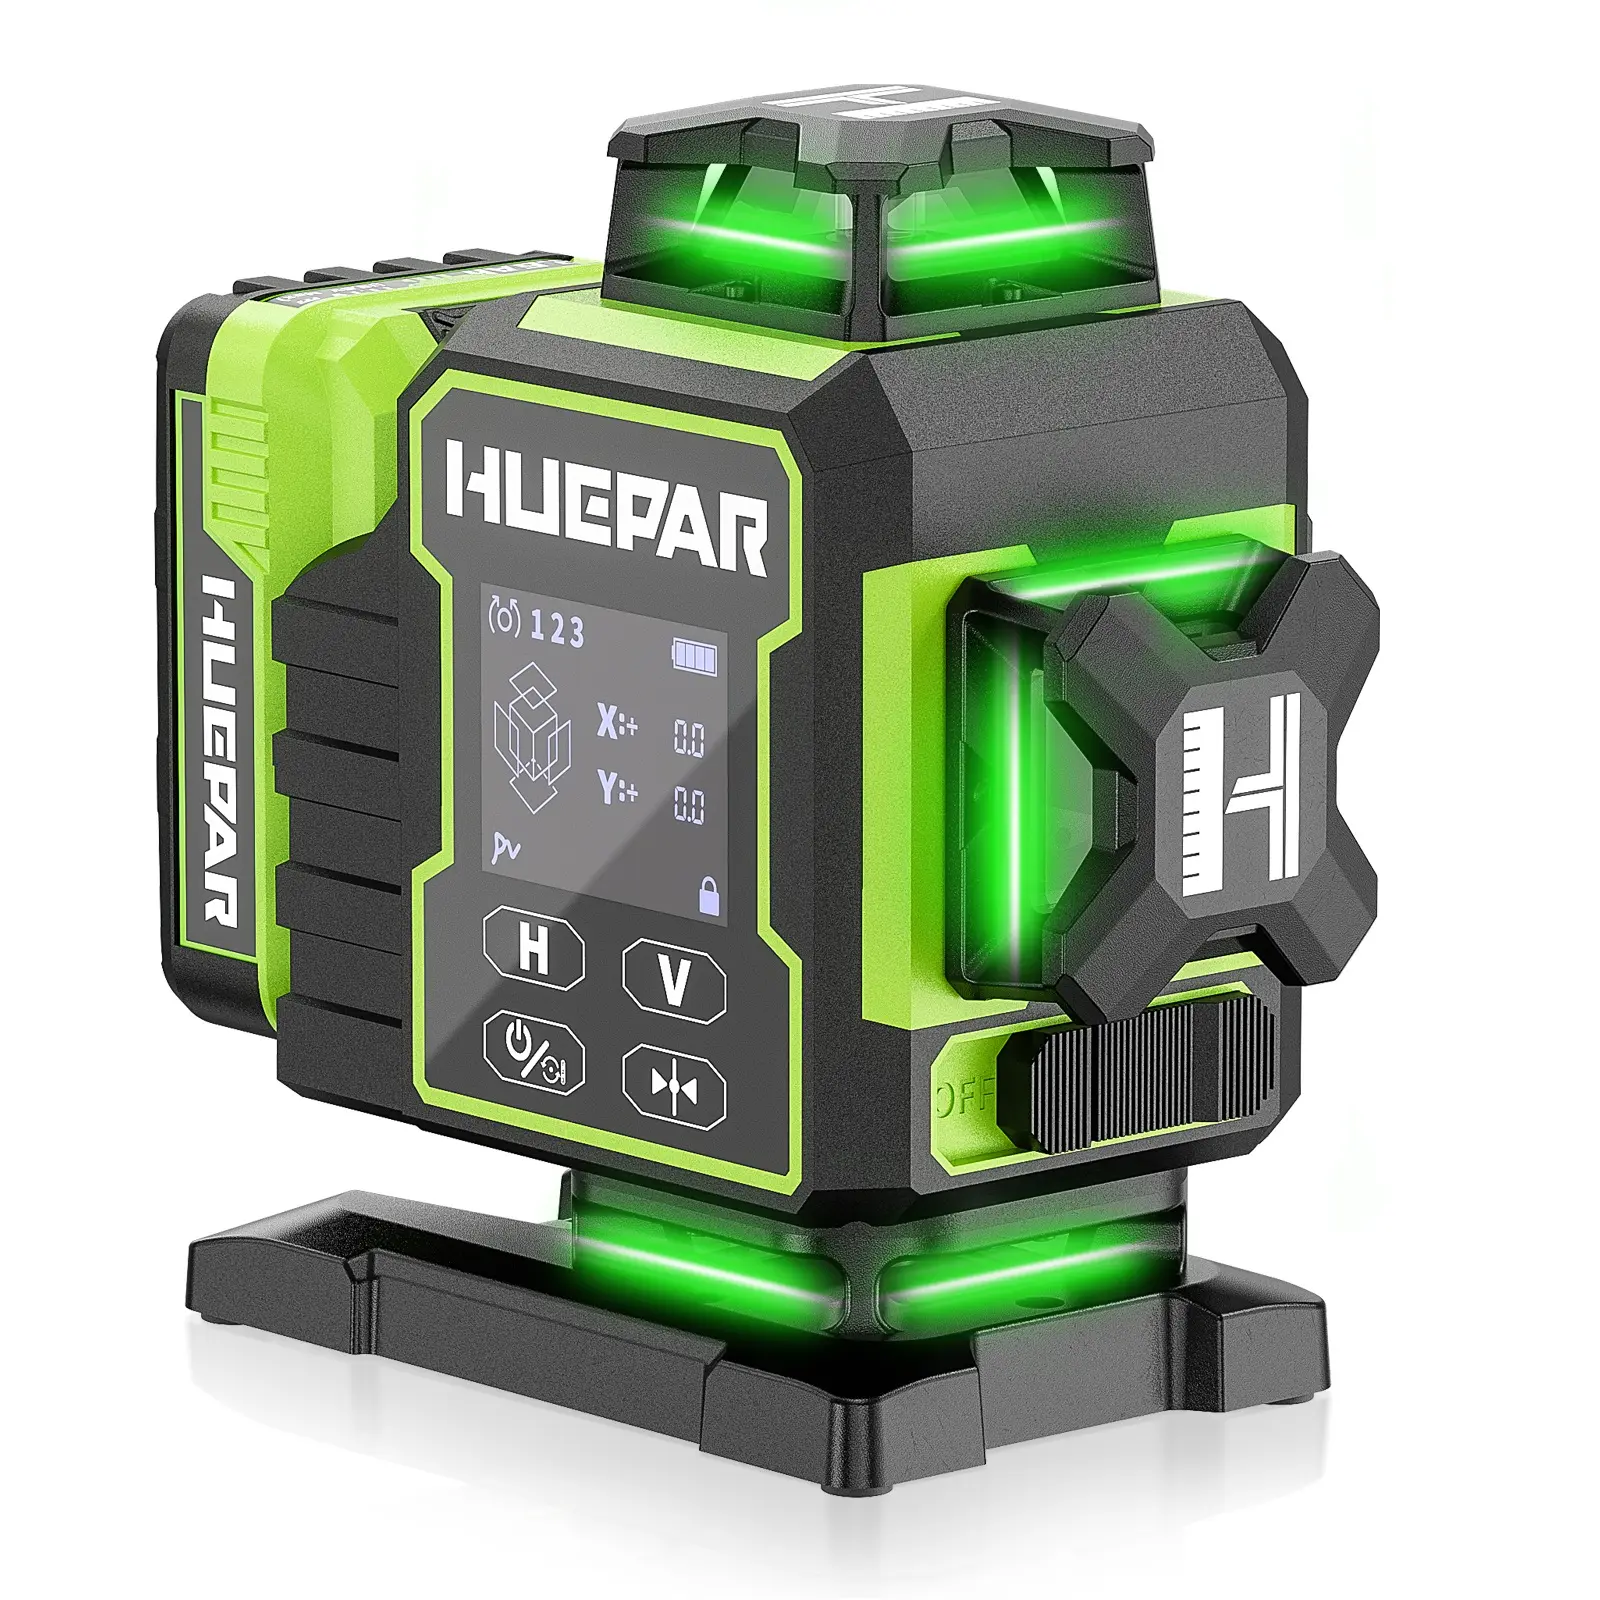 Huepar W04CG 4D Green 16 Lines Laser Level Precise Adjustment Brightness With 360 Motorized Rotating Base